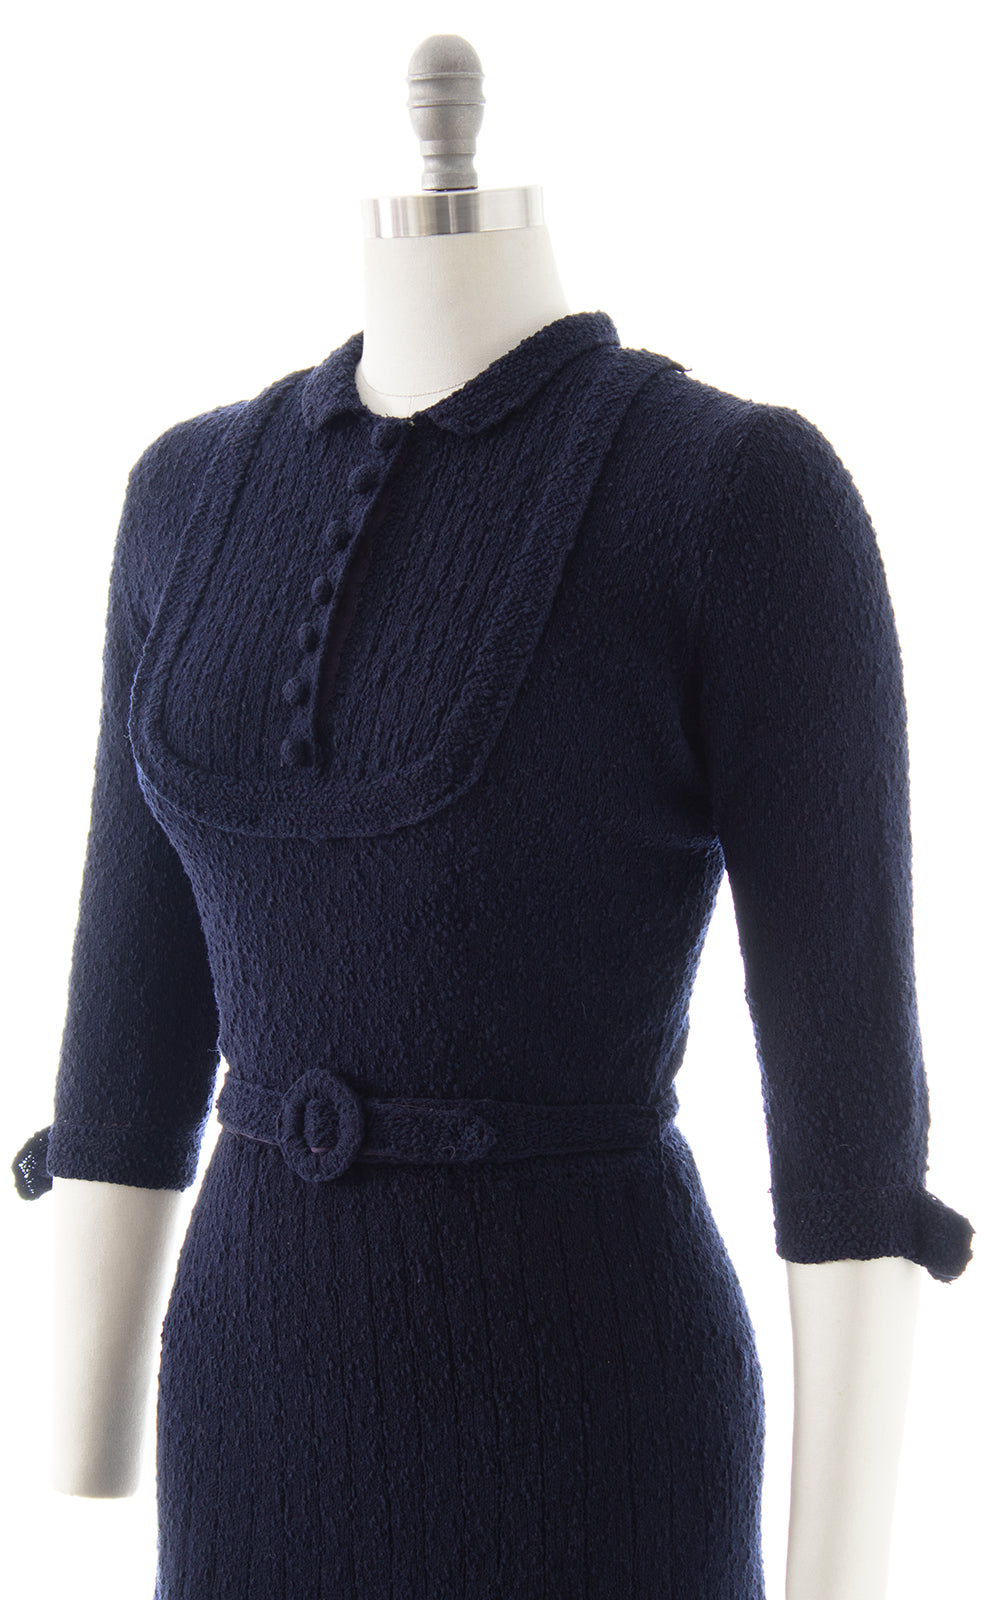 1940s 1950s Navy Blue Knit Wool Sweater Dress | x-small/small